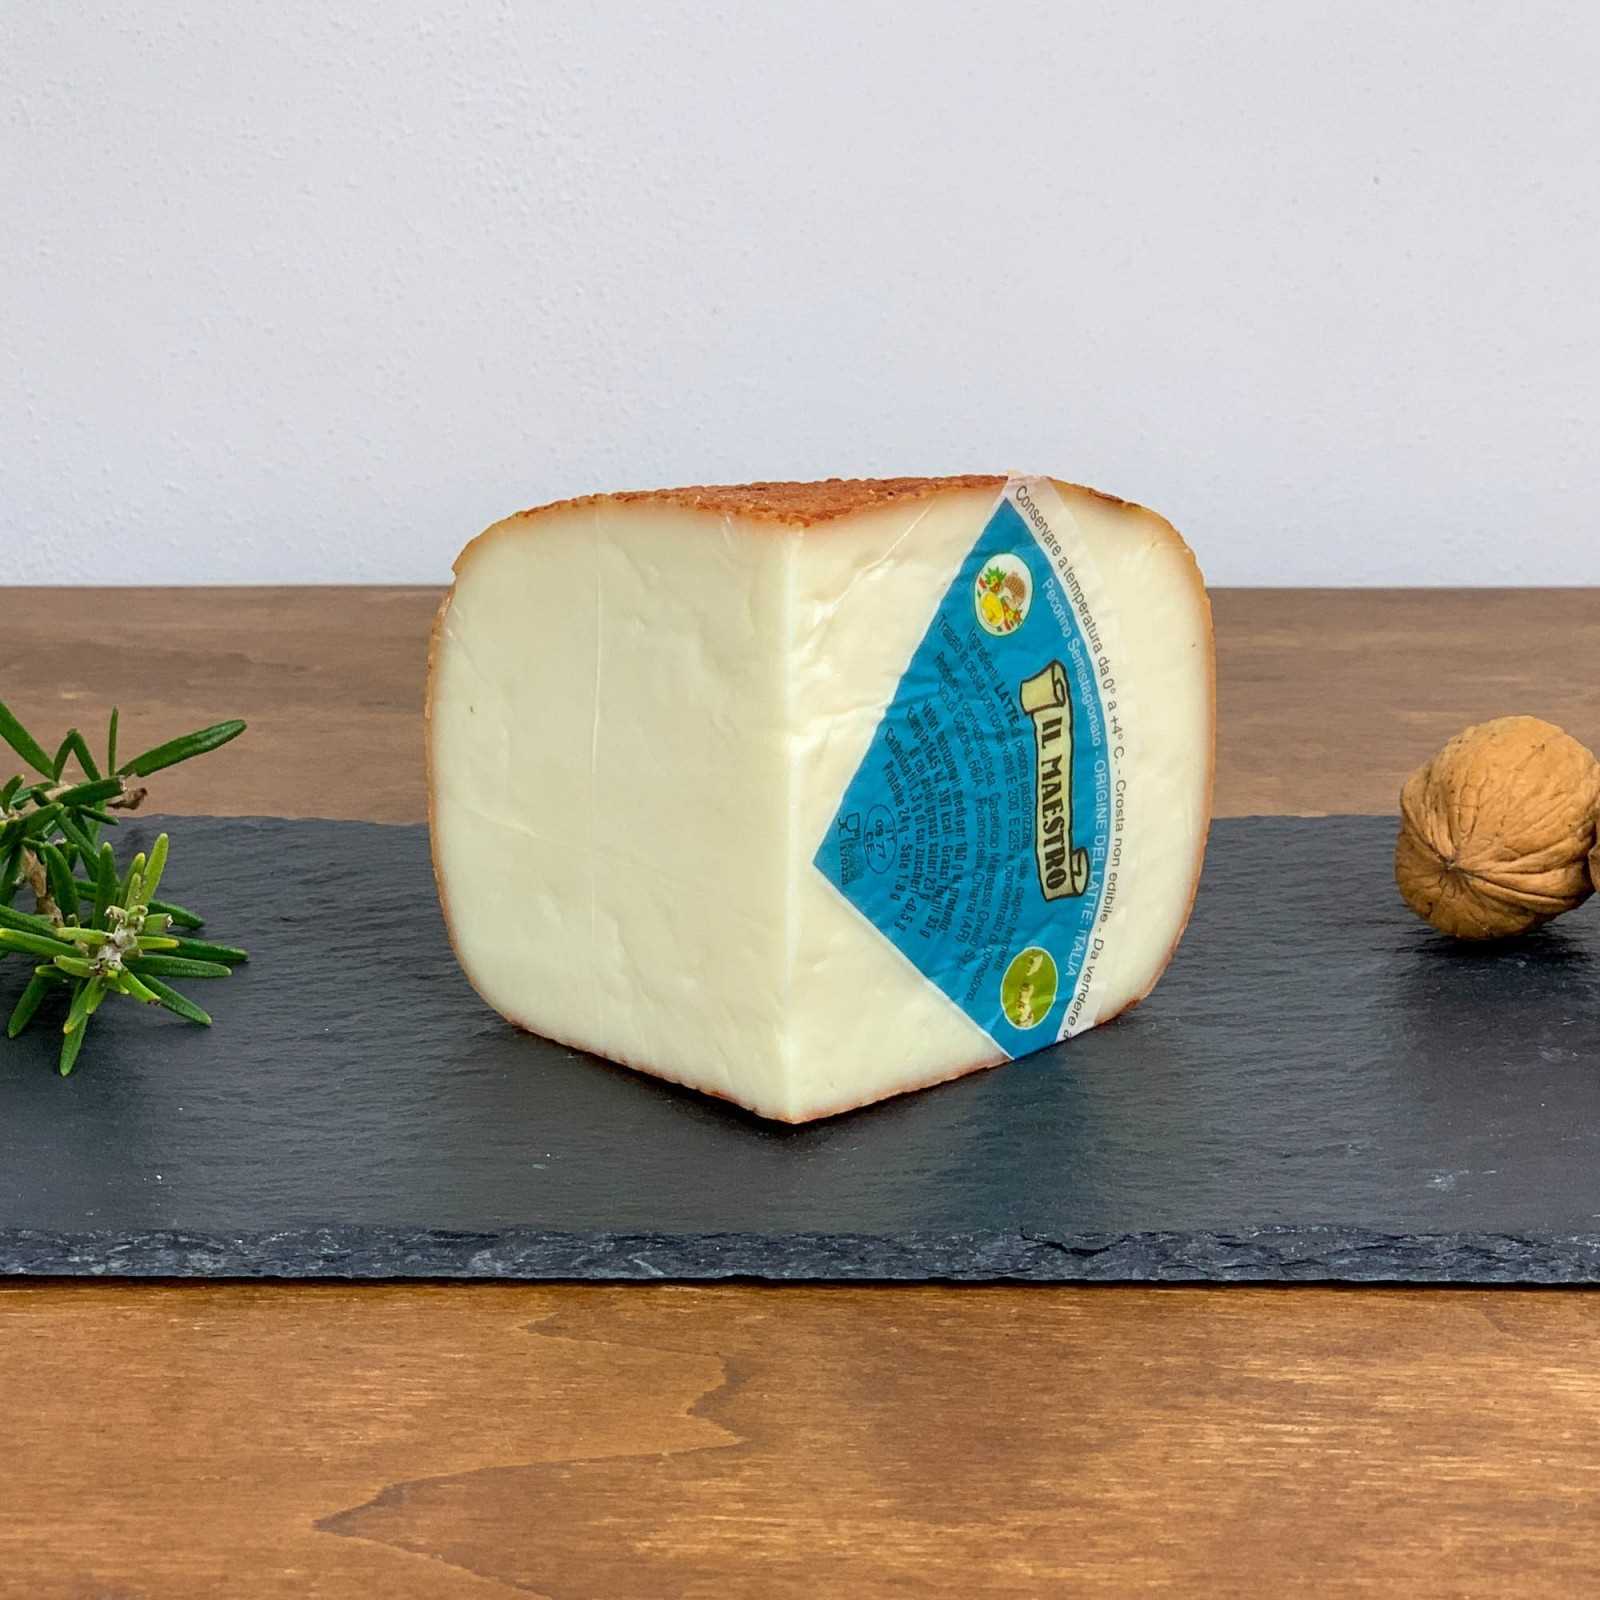 “Maestro” Semi-Aged Tuscan Pecorino Cheese.